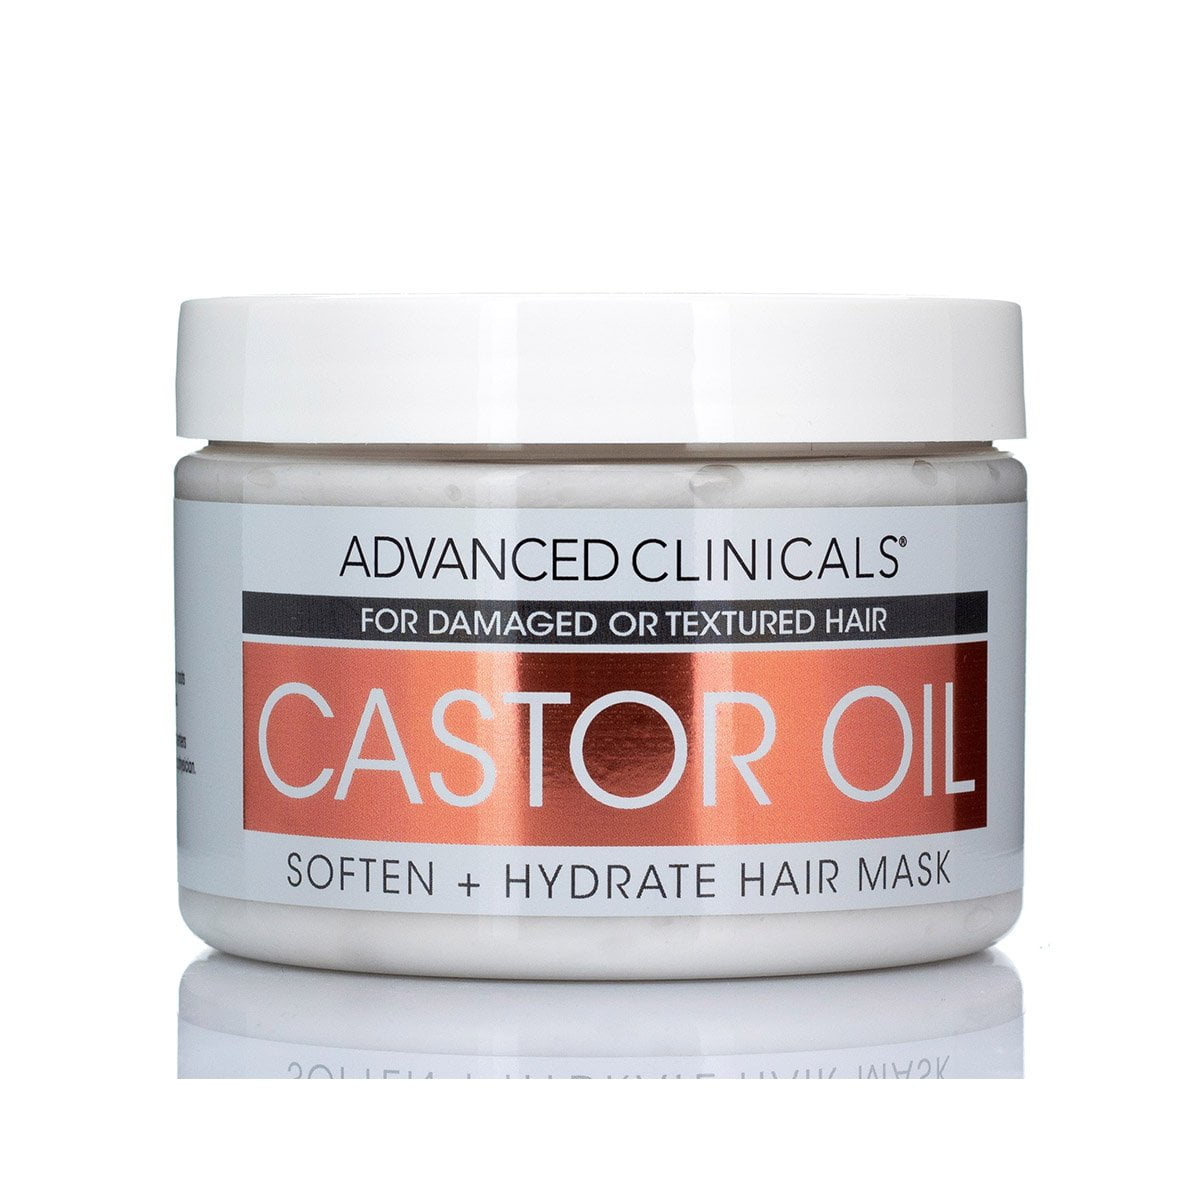 Advanced Clinicals Castor Oil Soften + Hydrate Hair Mask 12 oz - Walmart.com